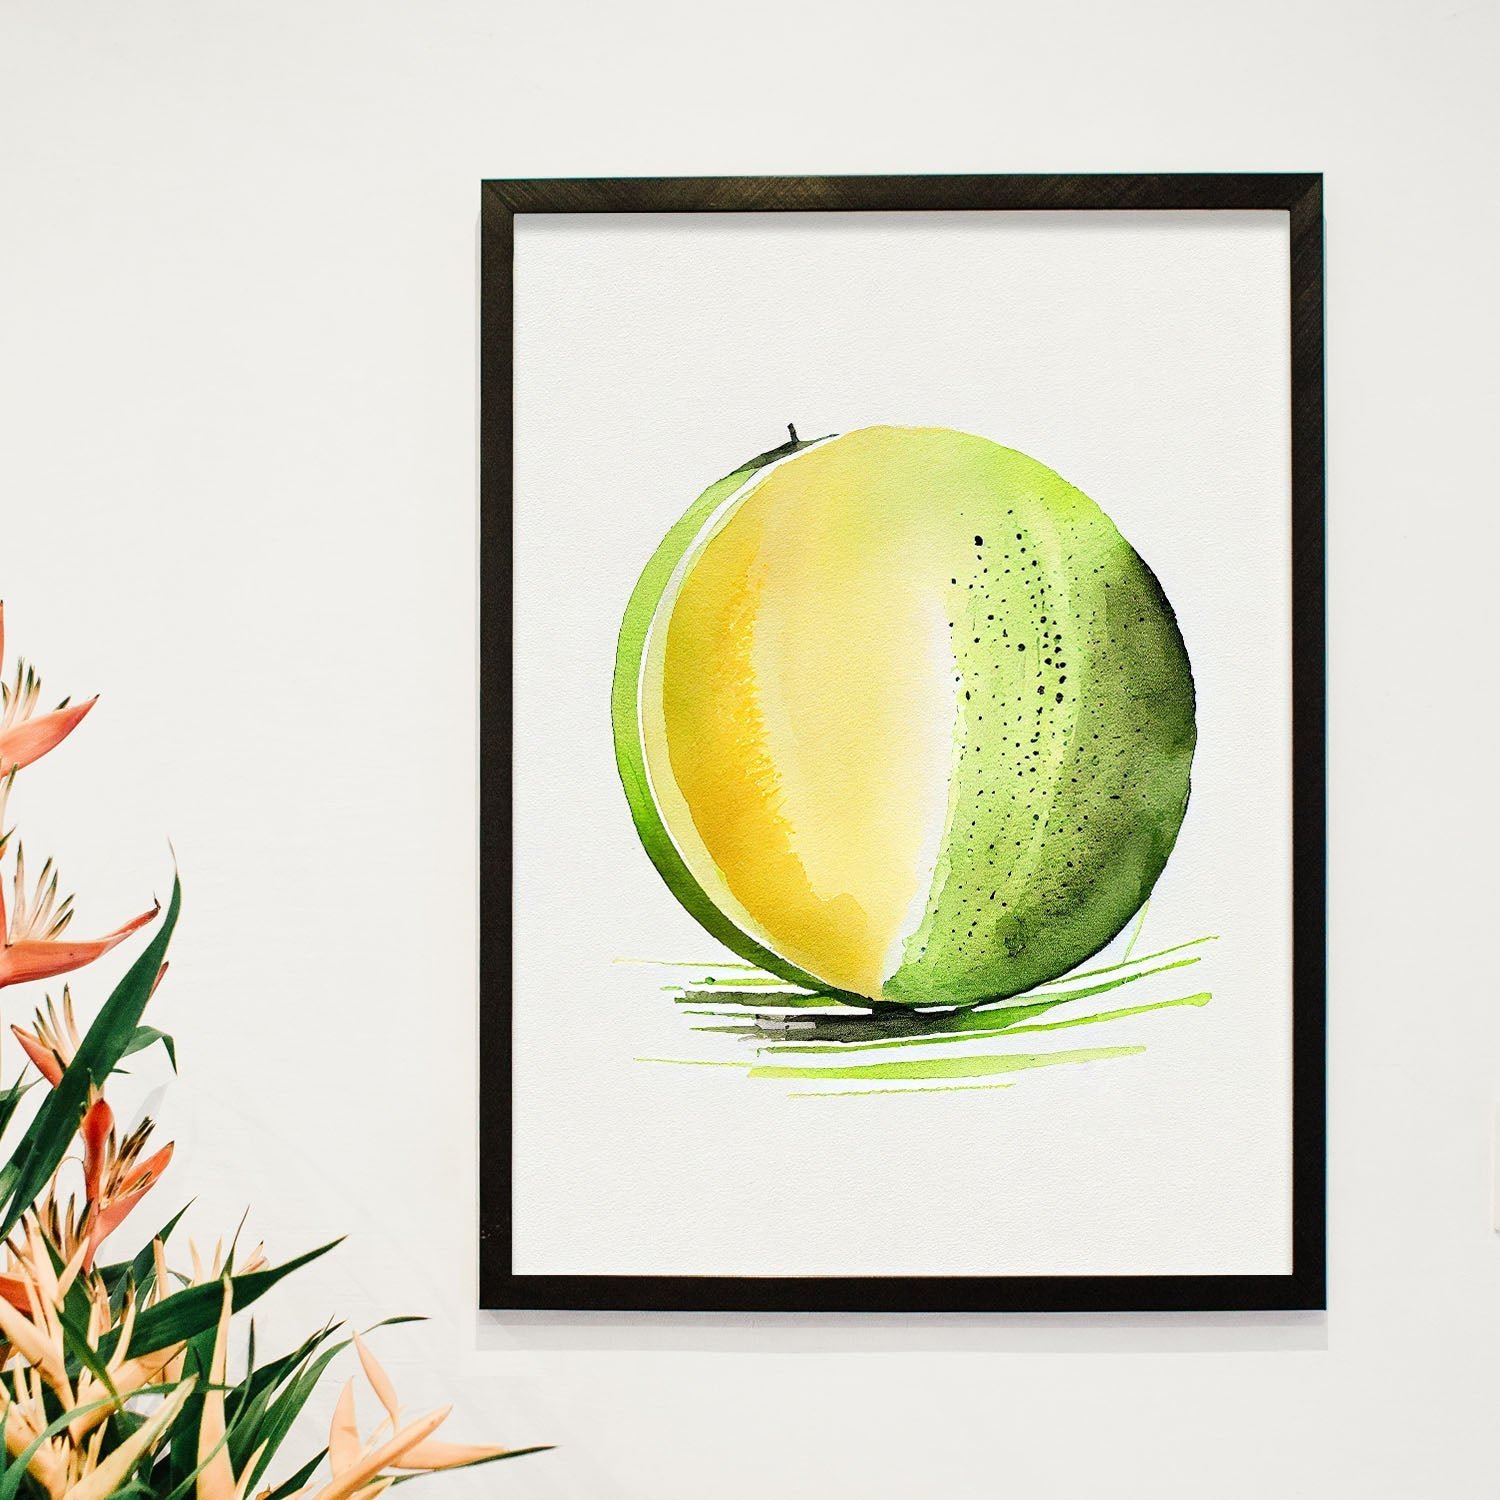 Nacnic minimalist Melon_1. Aesthetic Wall Art Prints for Bedroom or Living Room Design.-Artwork-Nacnic-A4-Sin Marco-Nacnic Estudio SL